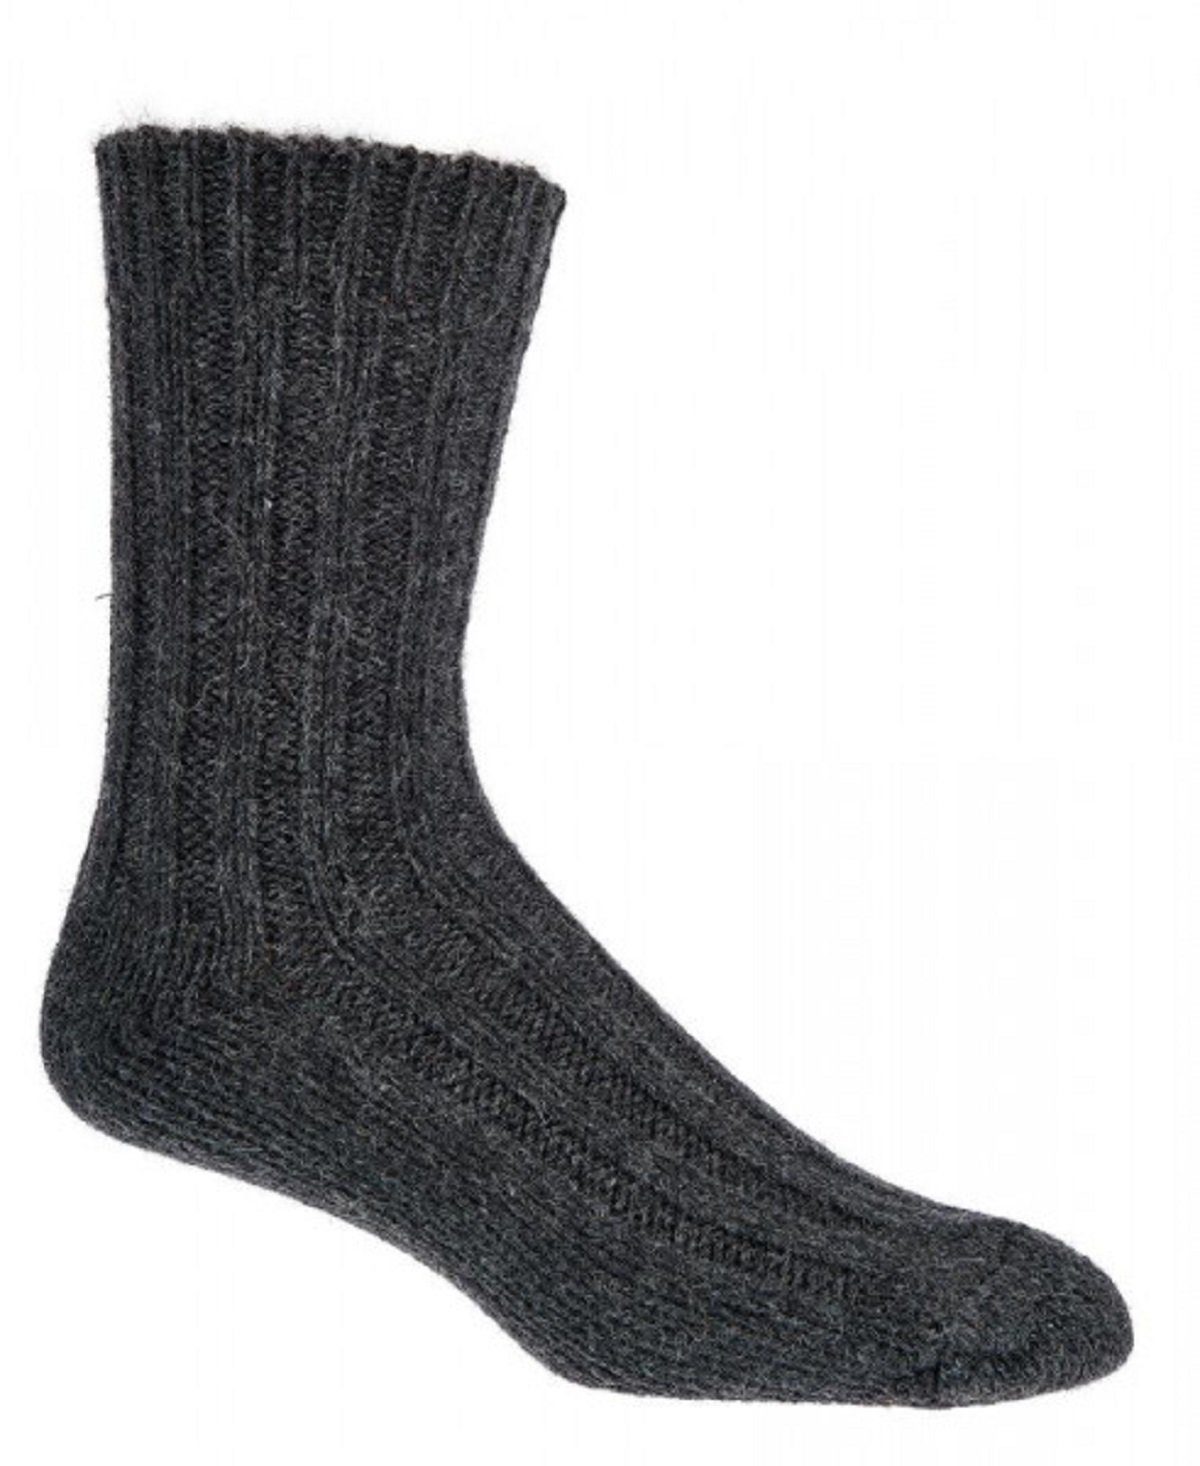 Socks 4 Fun Socken Fun 100% (2er-Pack, Socks Wollsocken Bündel 6519 Alpaka 4 2-Paar, Paar) 2er 2 antrazit mit